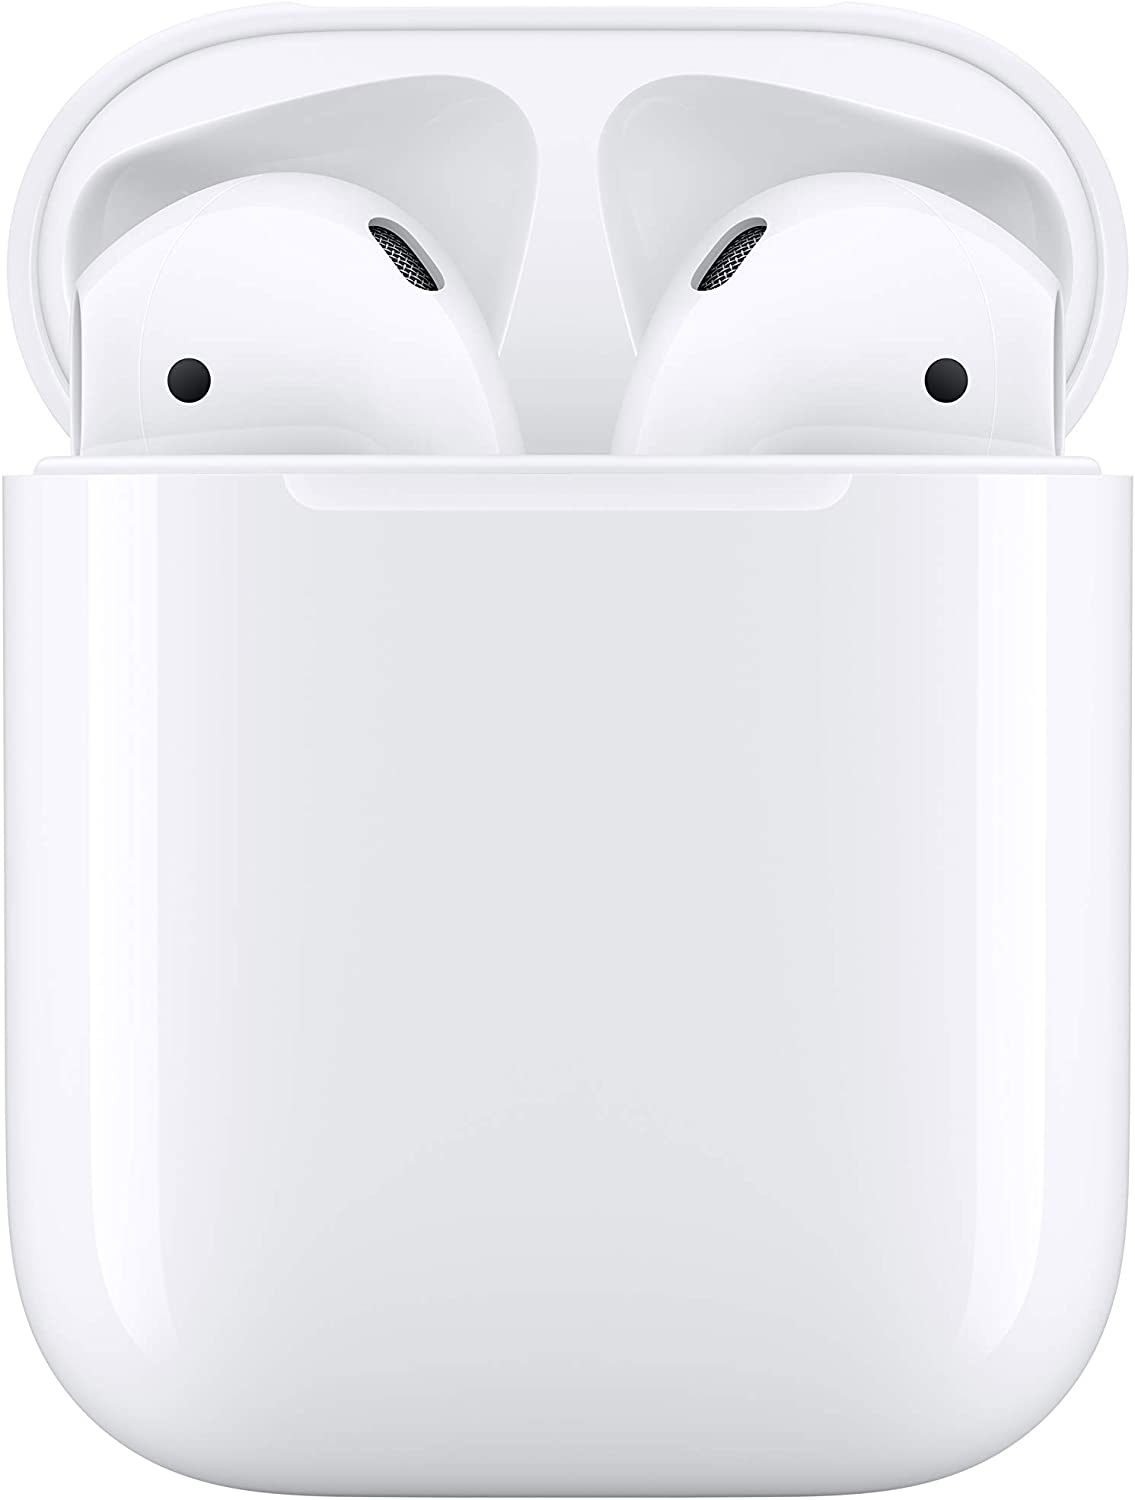 Apple AirPod Headphone Black Friday 2020